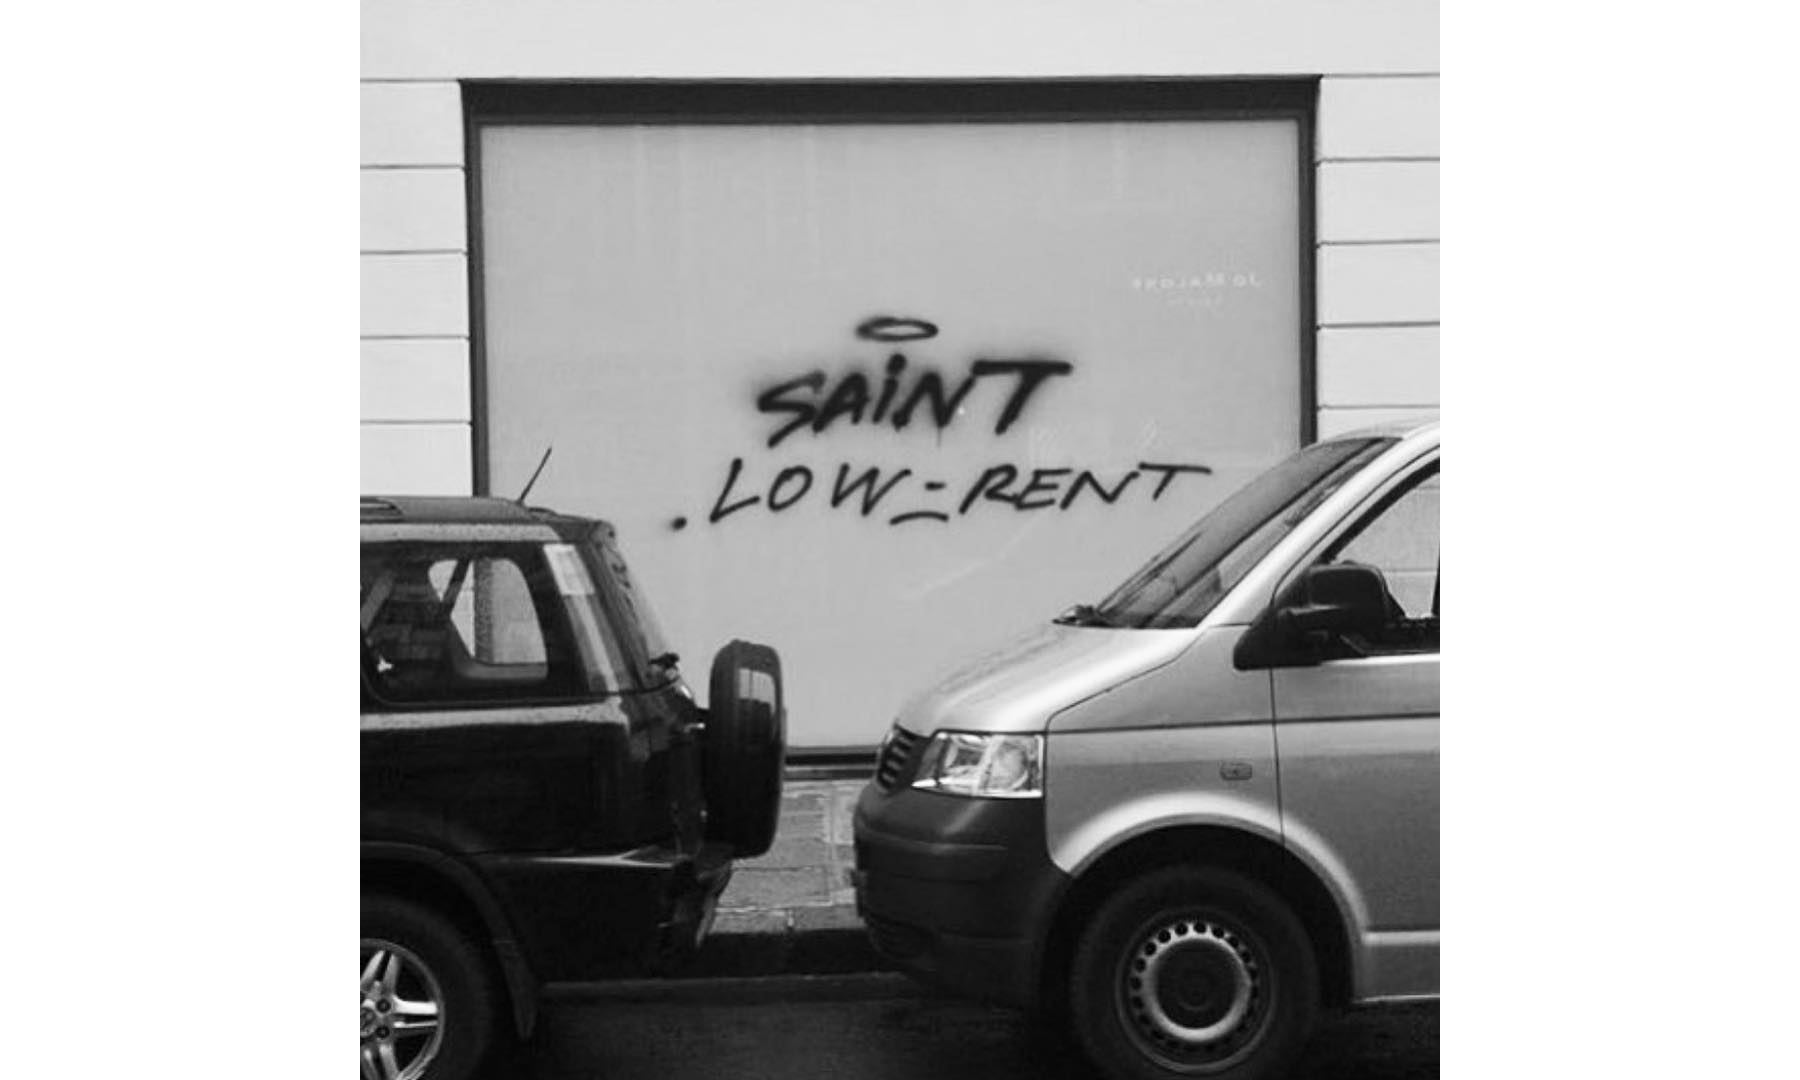 Kidult 袭击 Saint Laurent，留下涂鸦 “Saint Low rent”